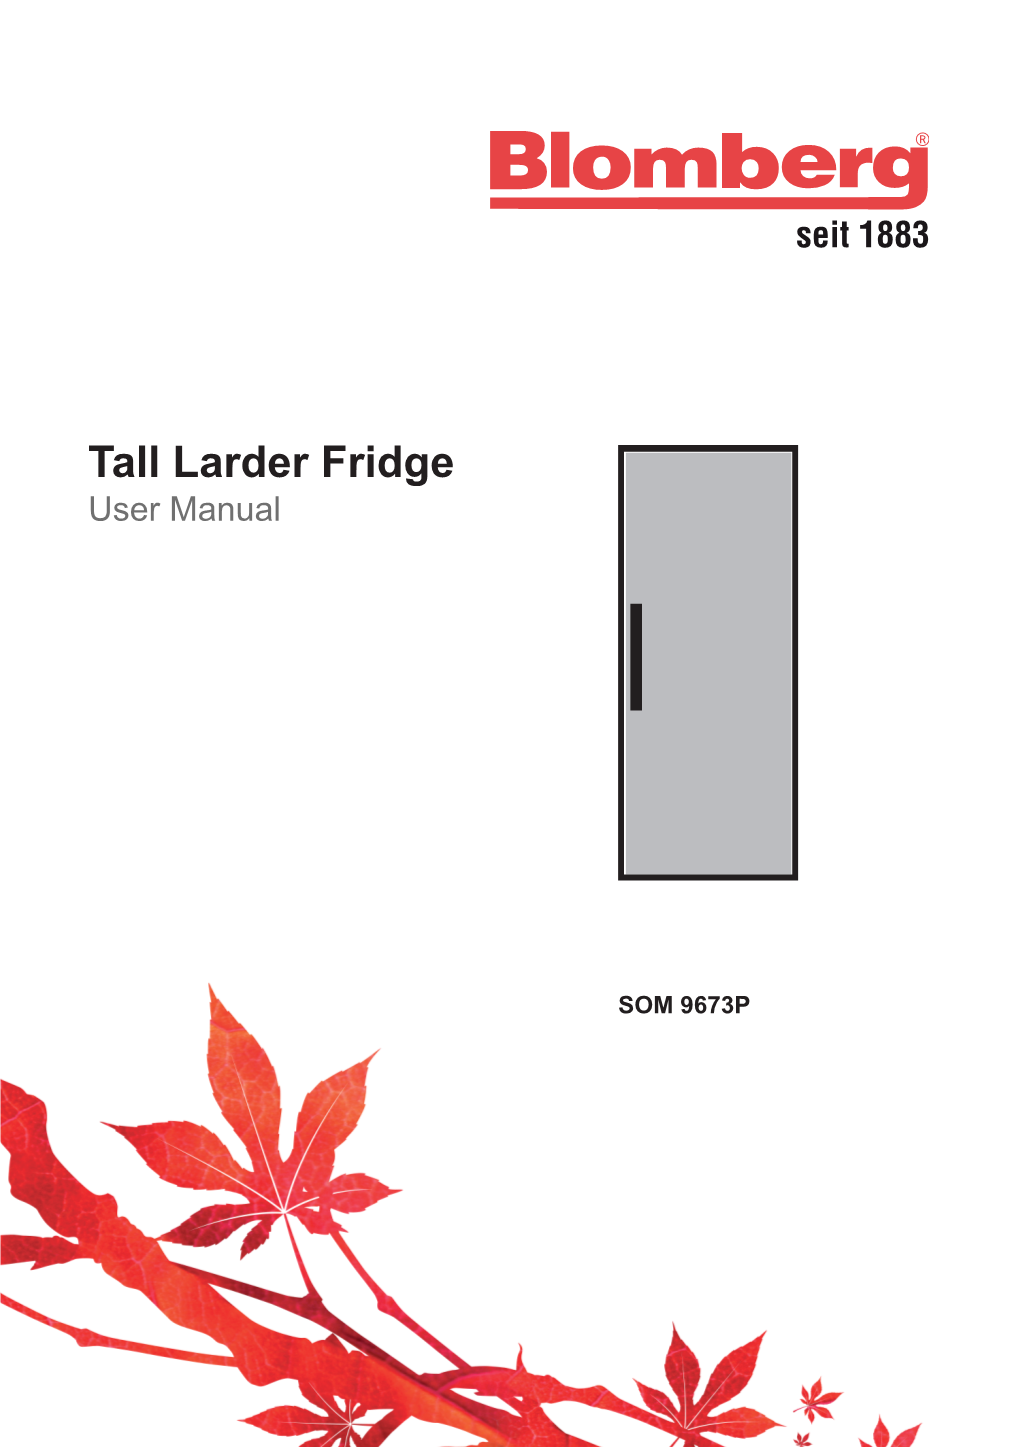 Tall Larder Fridge User Manual Info@Blomberginternational.Com